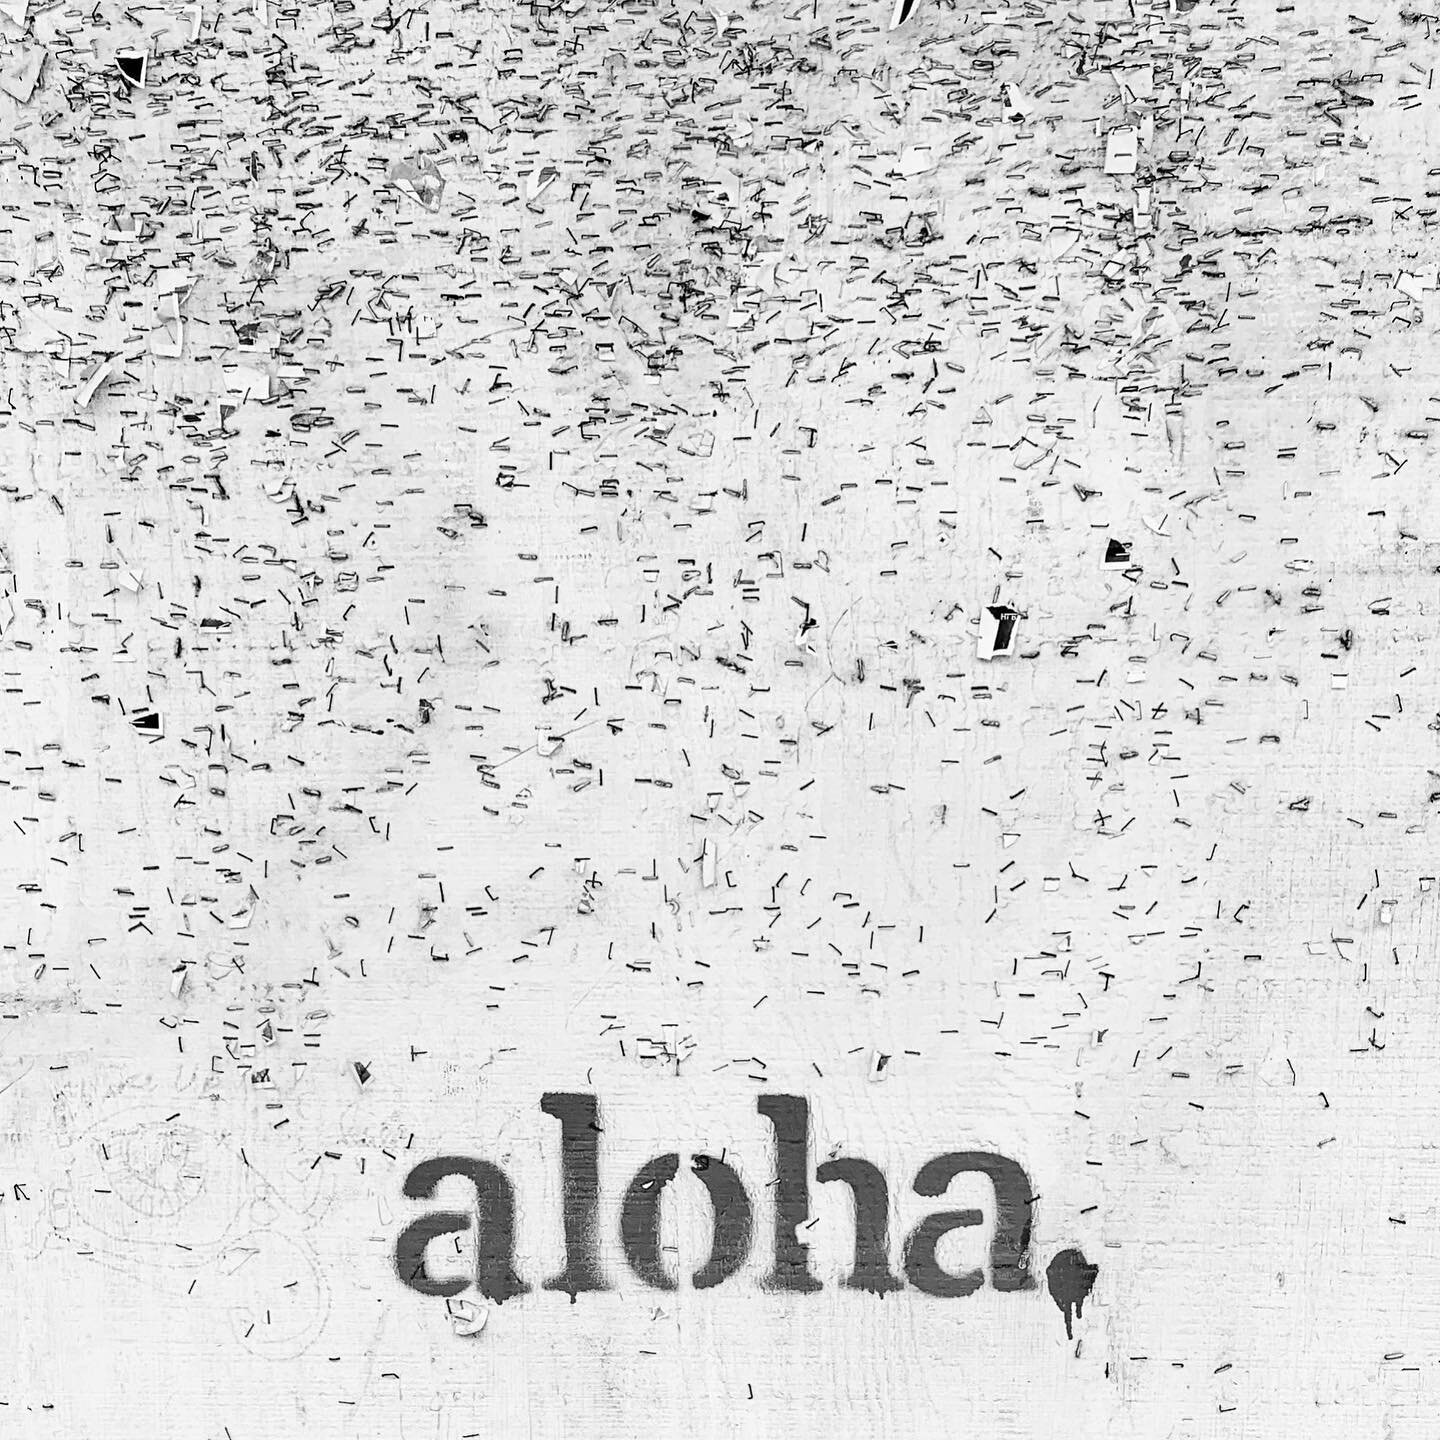 served daily
.
.
.
#aloha #kaimuki #honolulu #fieldnotes #bw #alohavibes #alohastate #アロハ #hawaii #slowdown #livesimply #enjoy #beachpark #bchprk